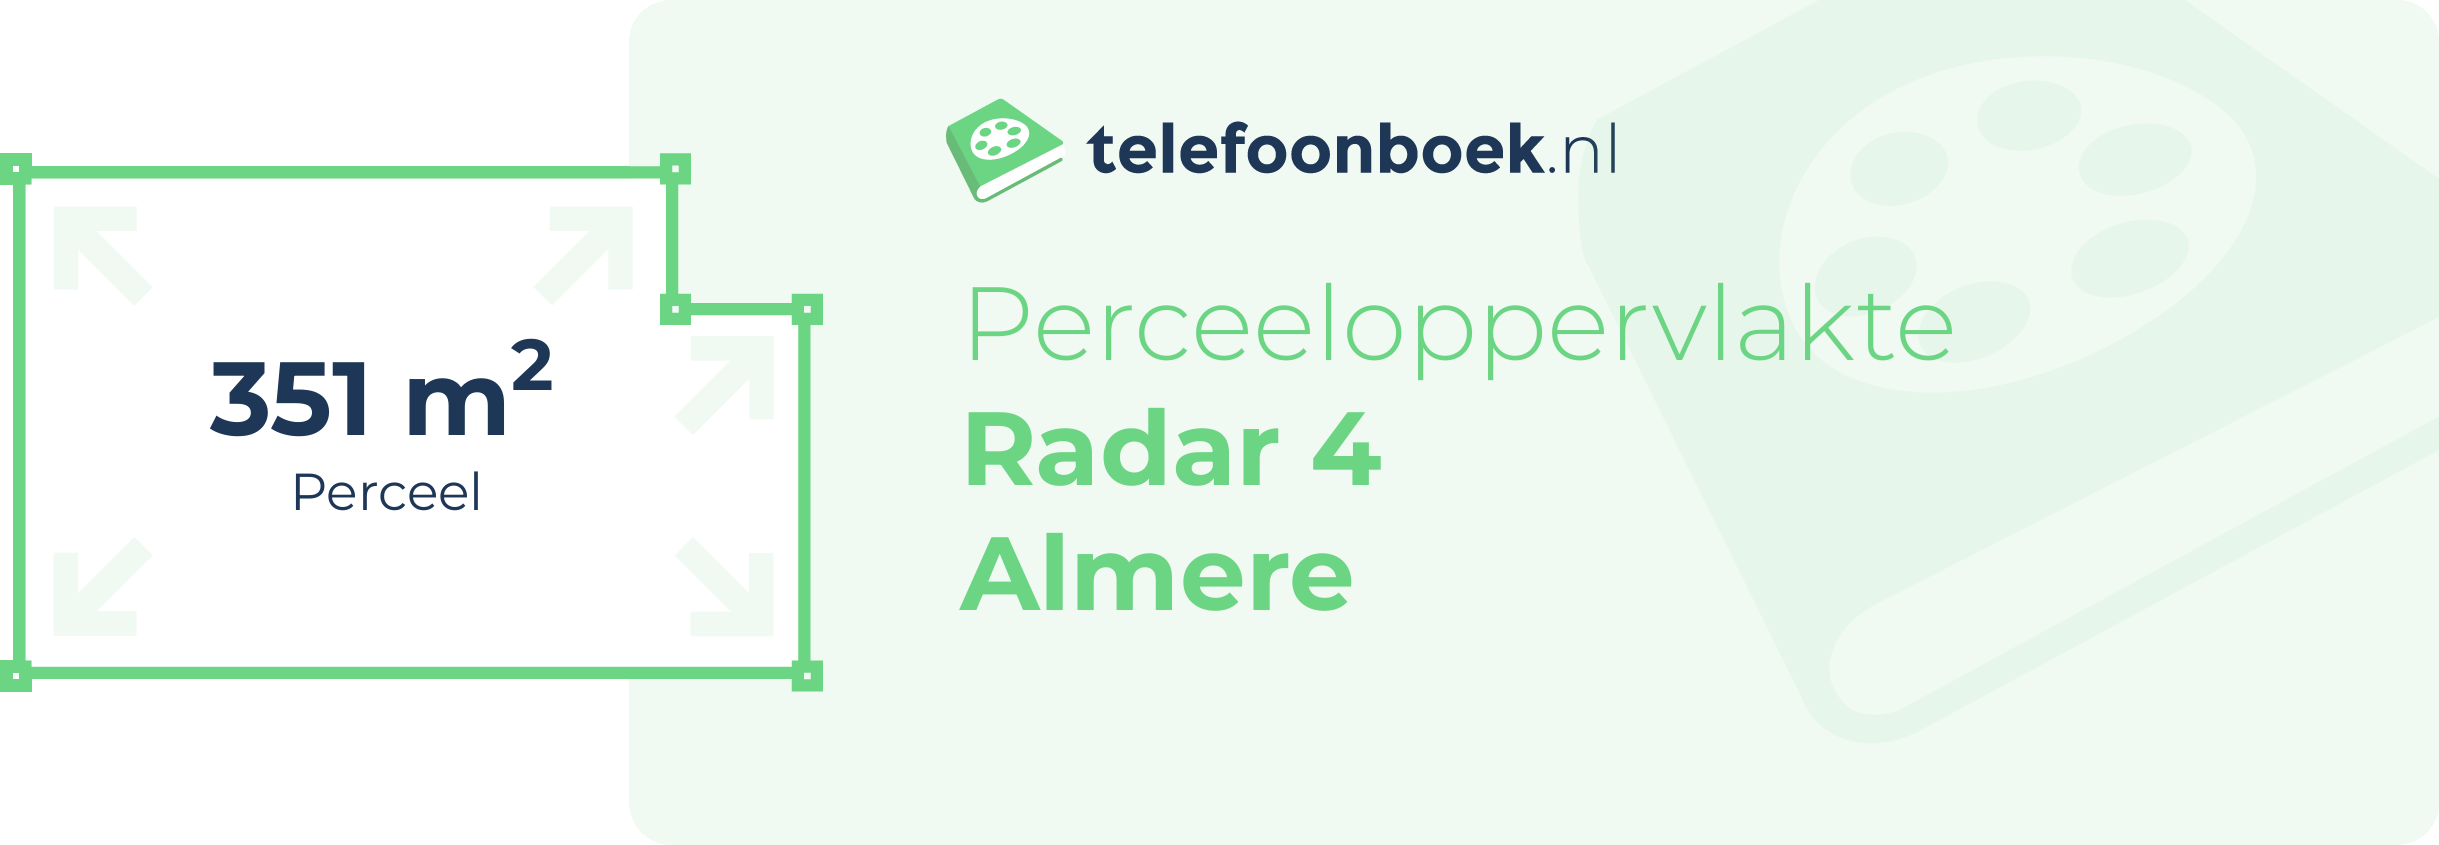 Perceeloppervlakte Radar 4 Almere